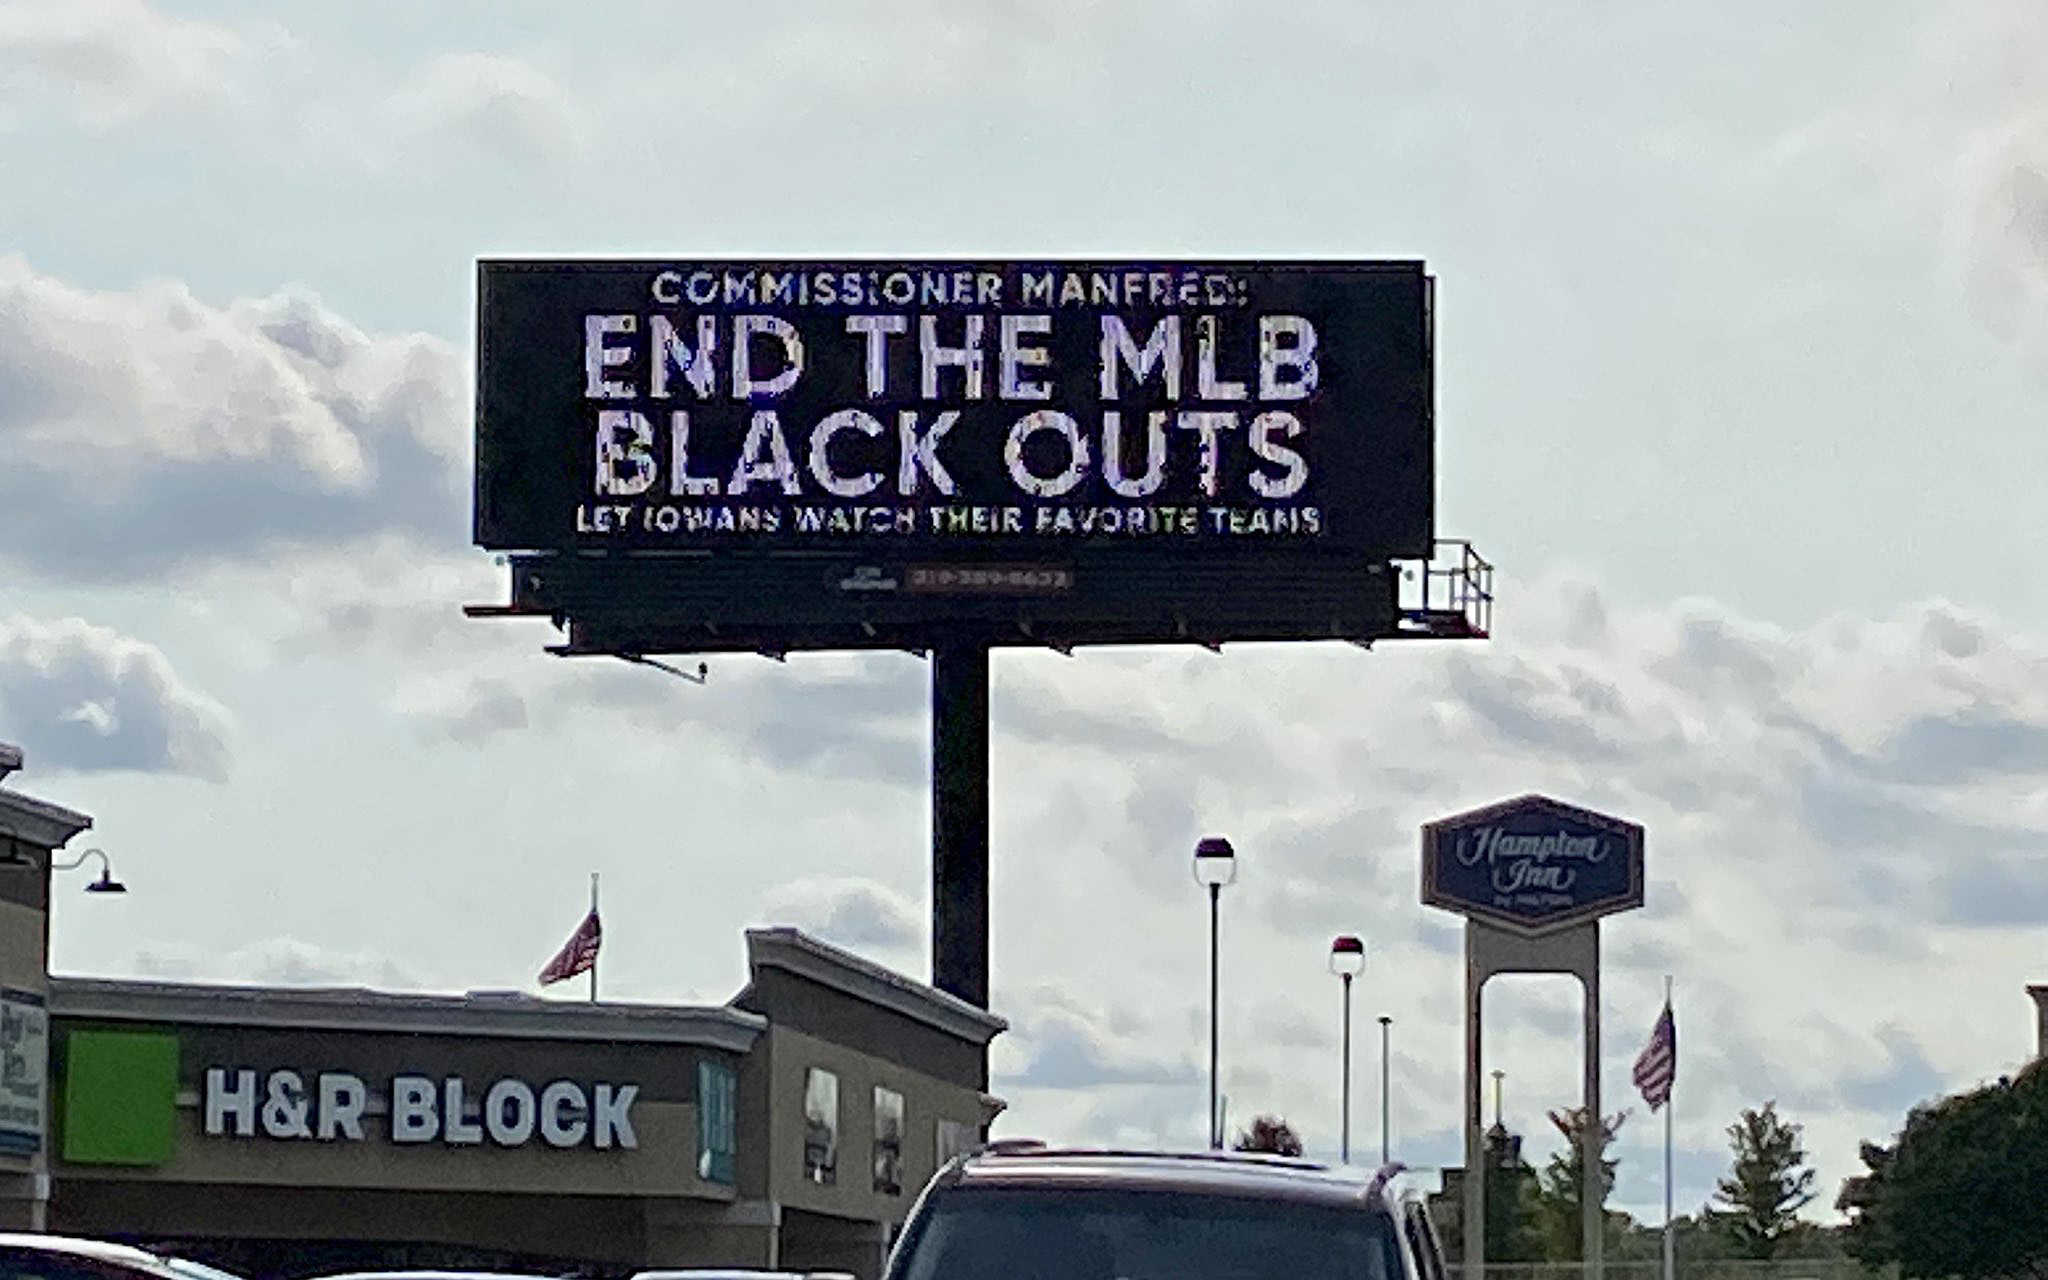 Iowa hero puts up billboard slamming MLB blackouts ahead of